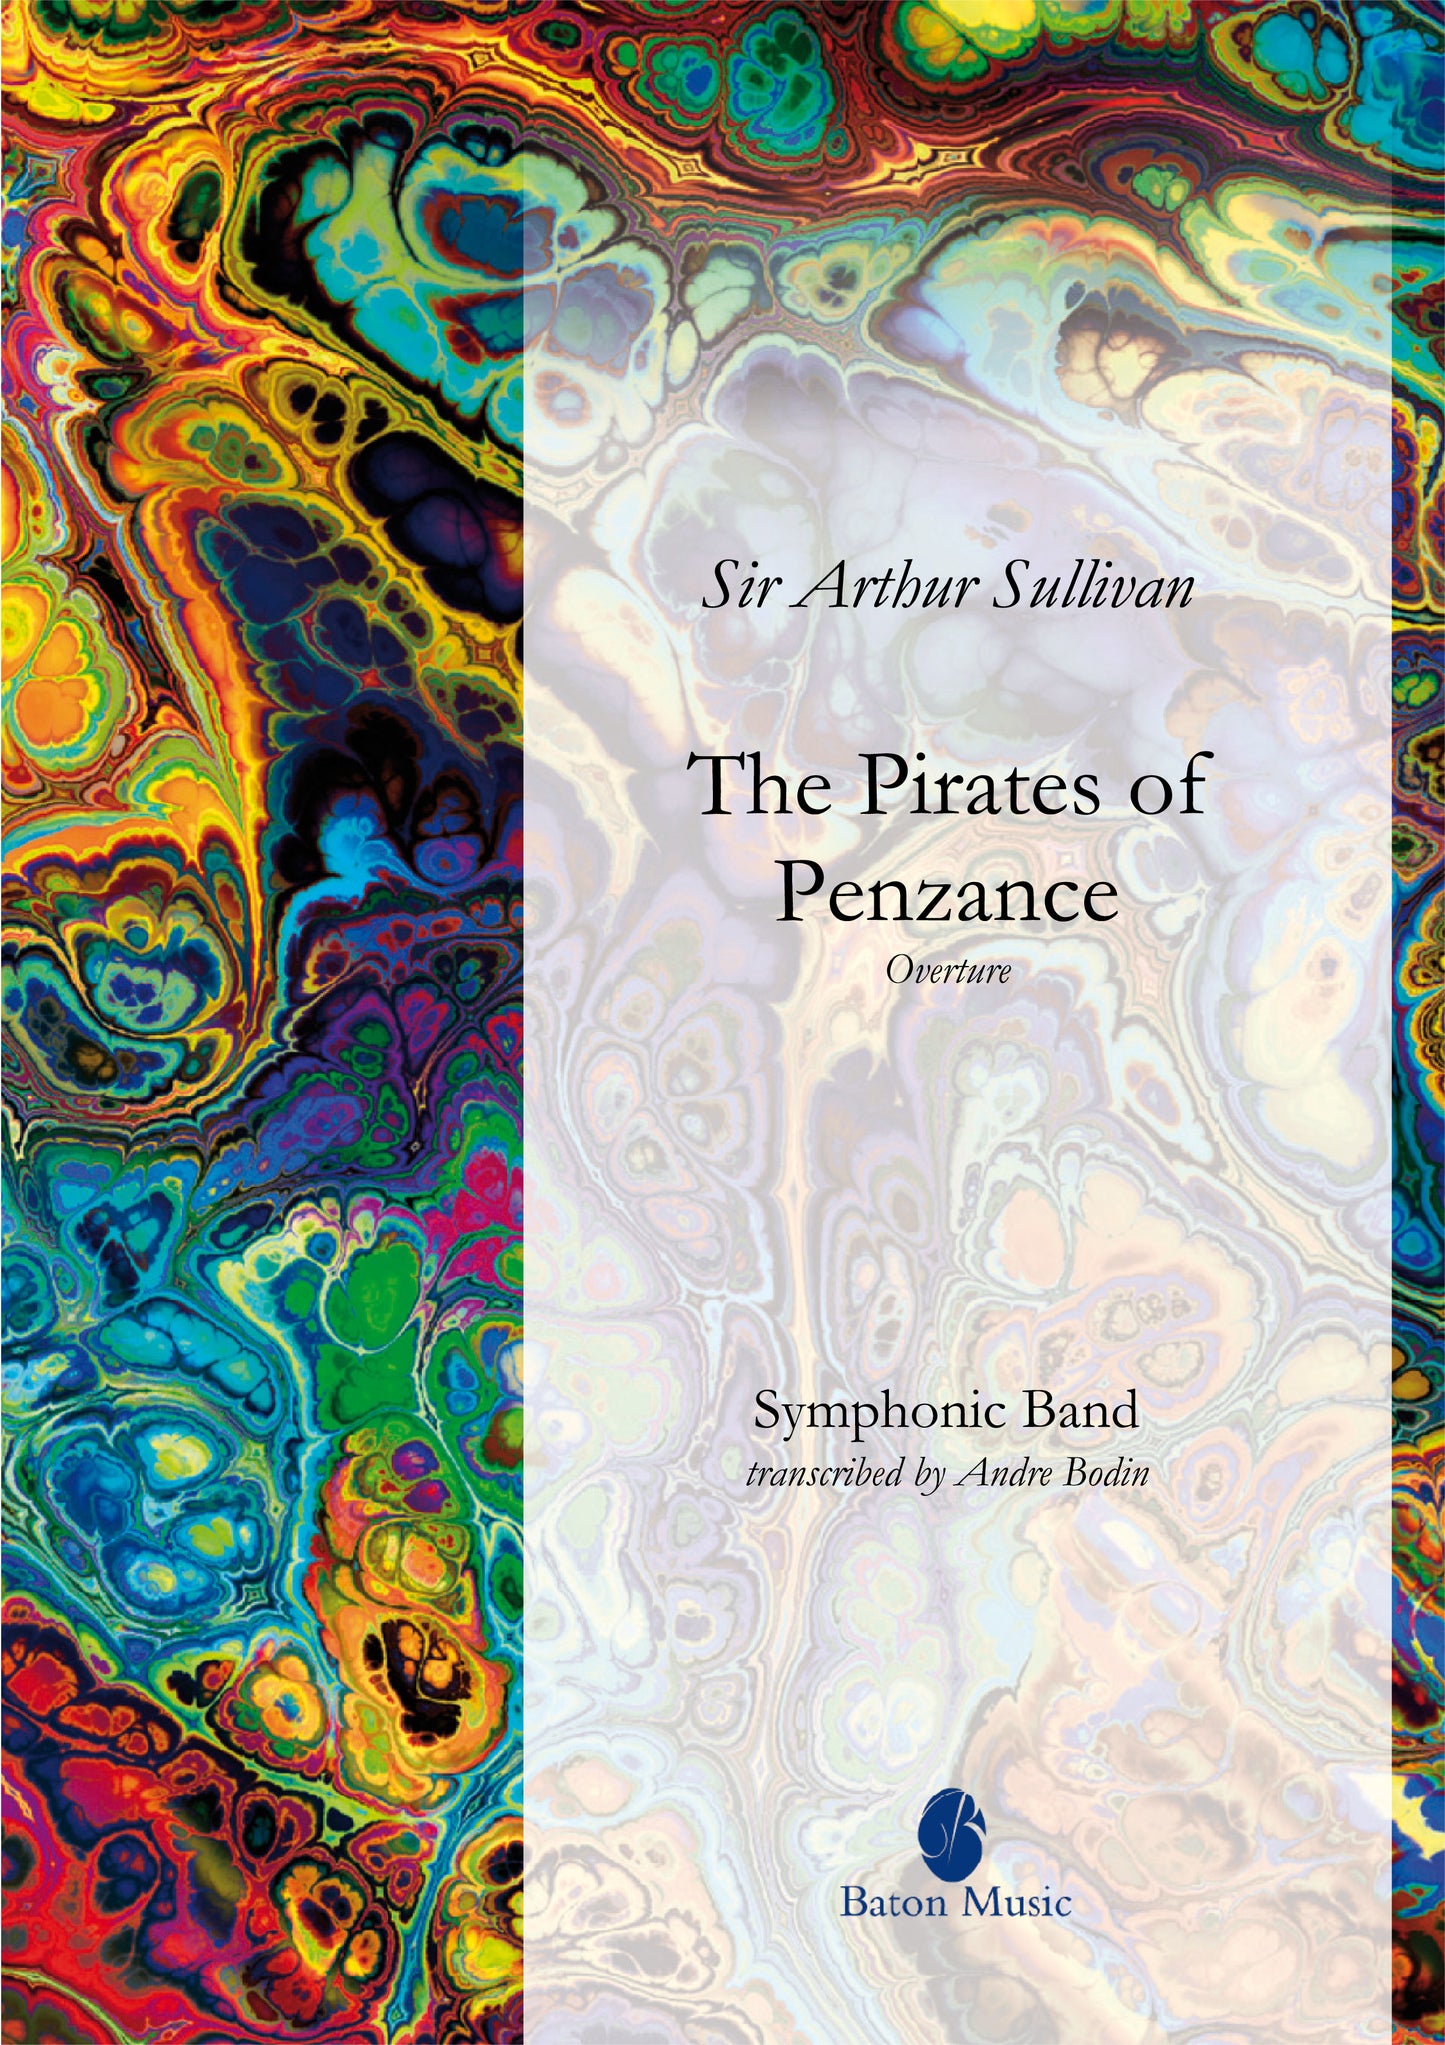 The Pirates of Penzance (Overture) - Sullivan